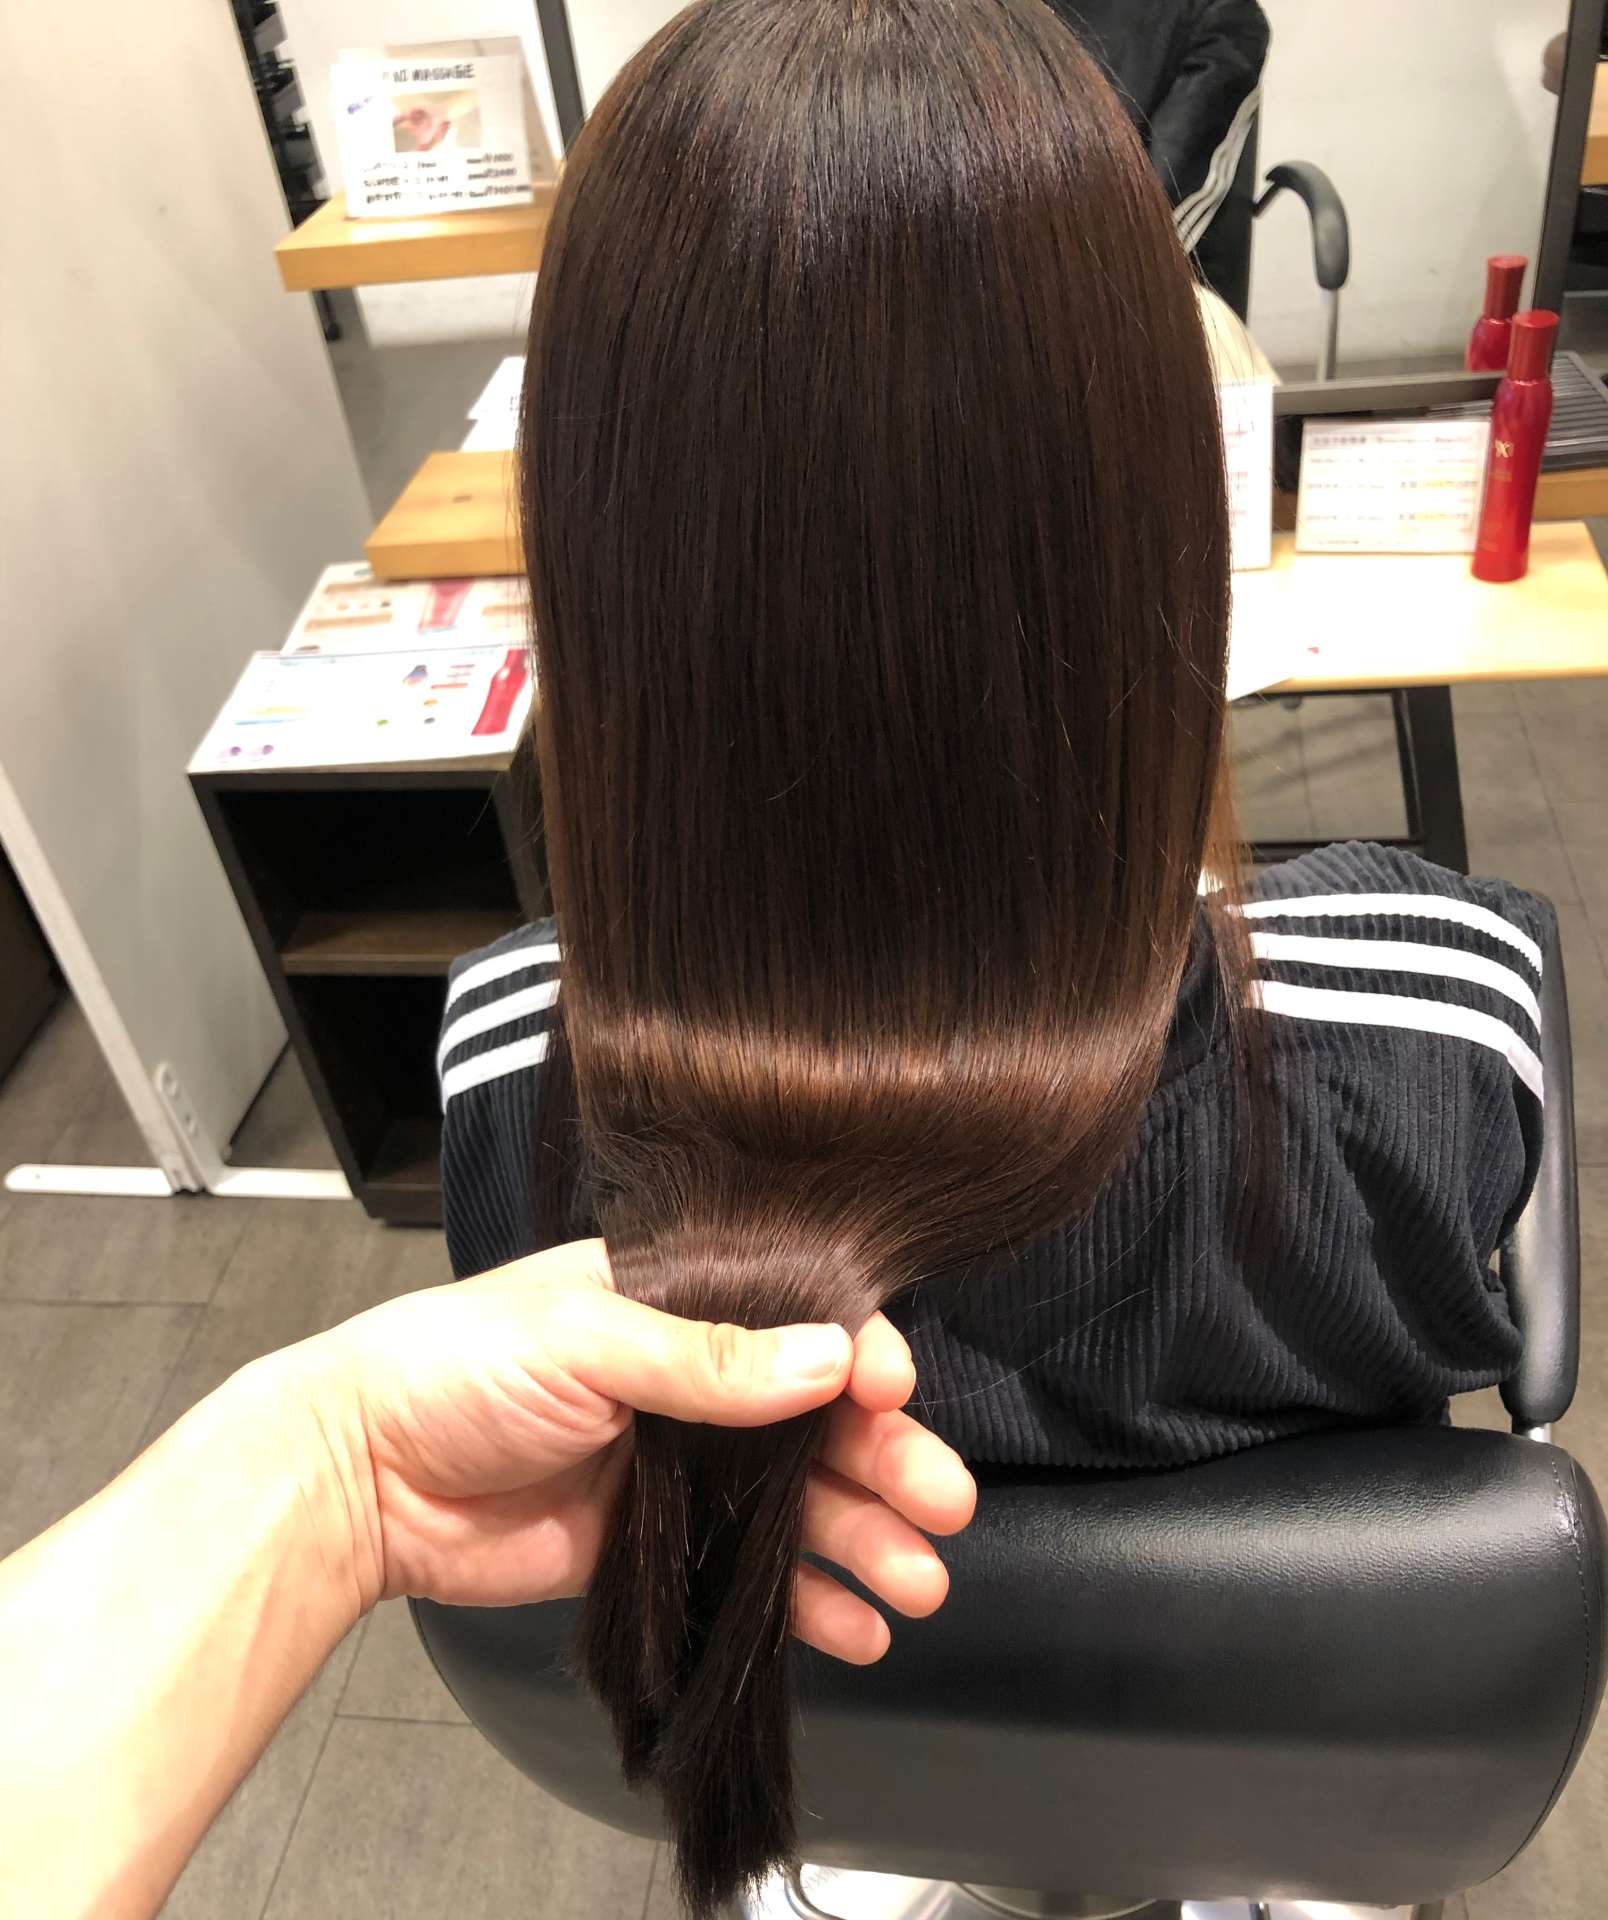 [Nagoya Station x Hair Salon] If you want glossy hair, hair beauty treatment